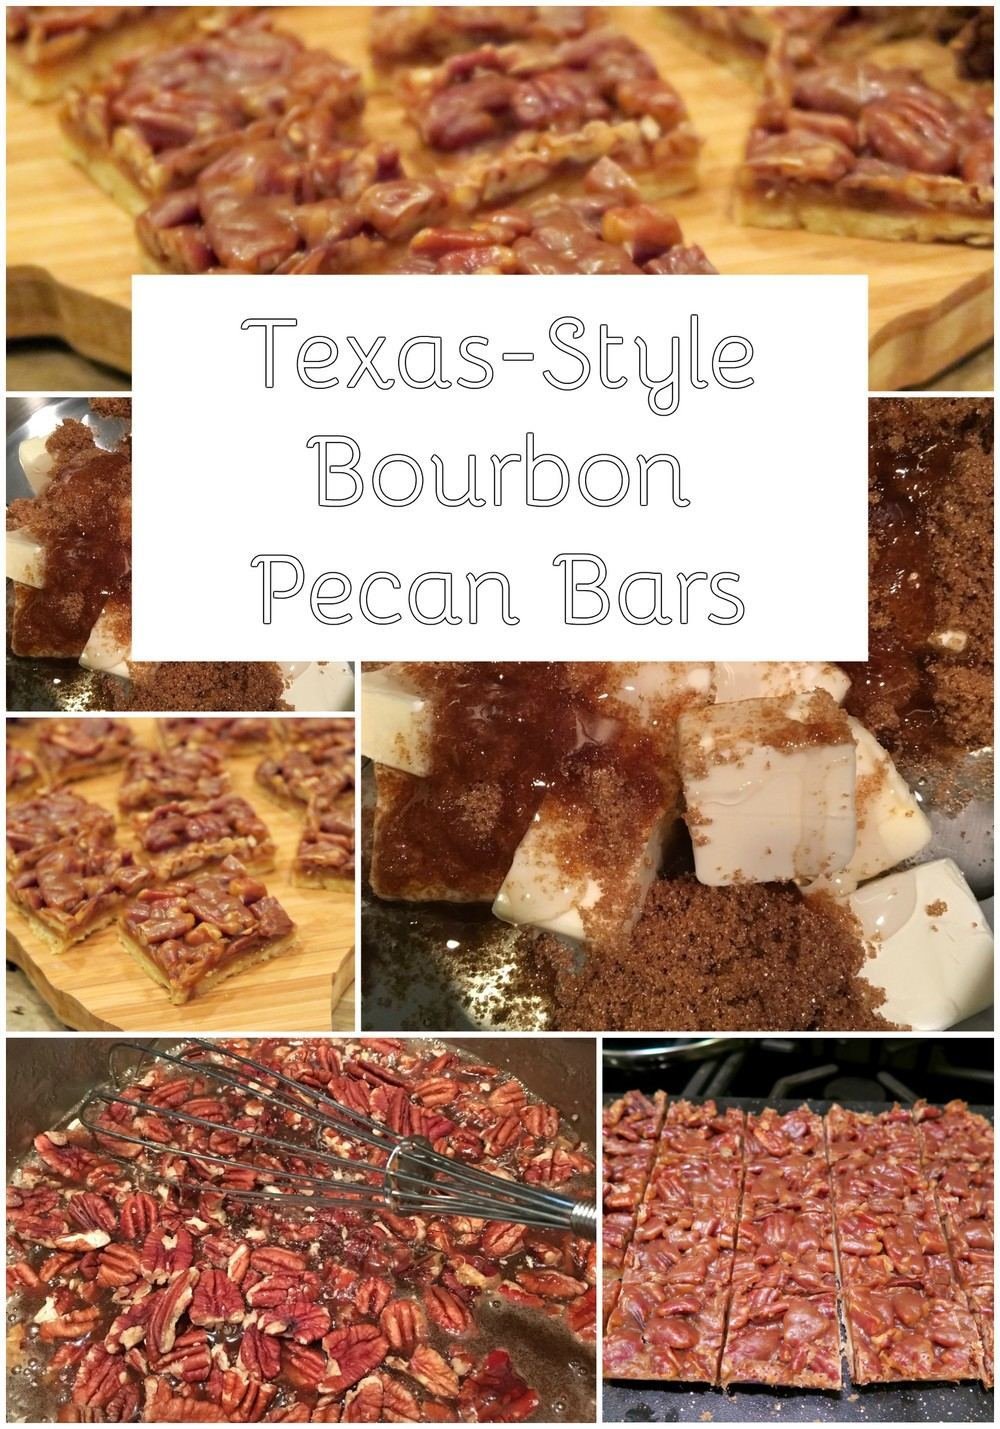 Image grid of bourbon pecan bars